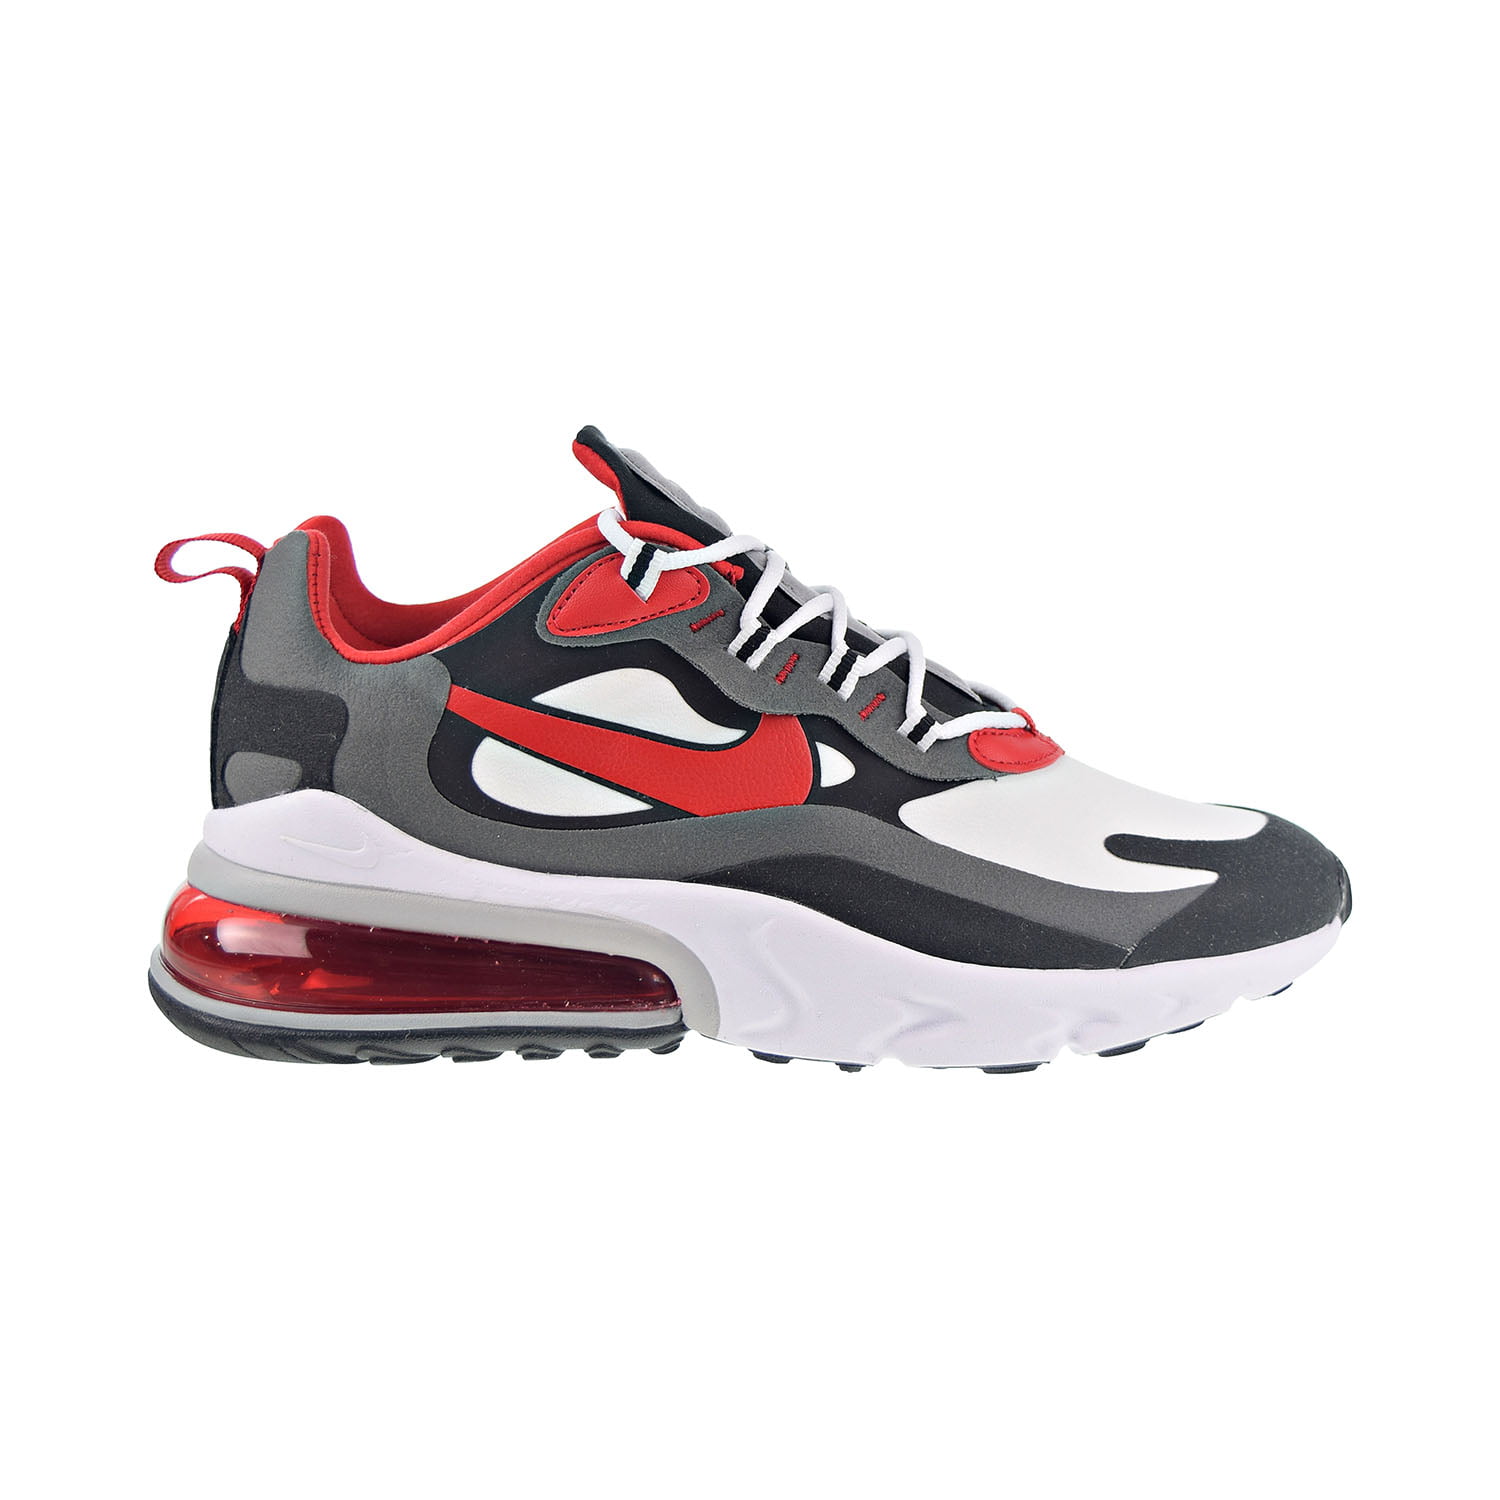 Nike Drop Air Max 270 Black/White/University Red